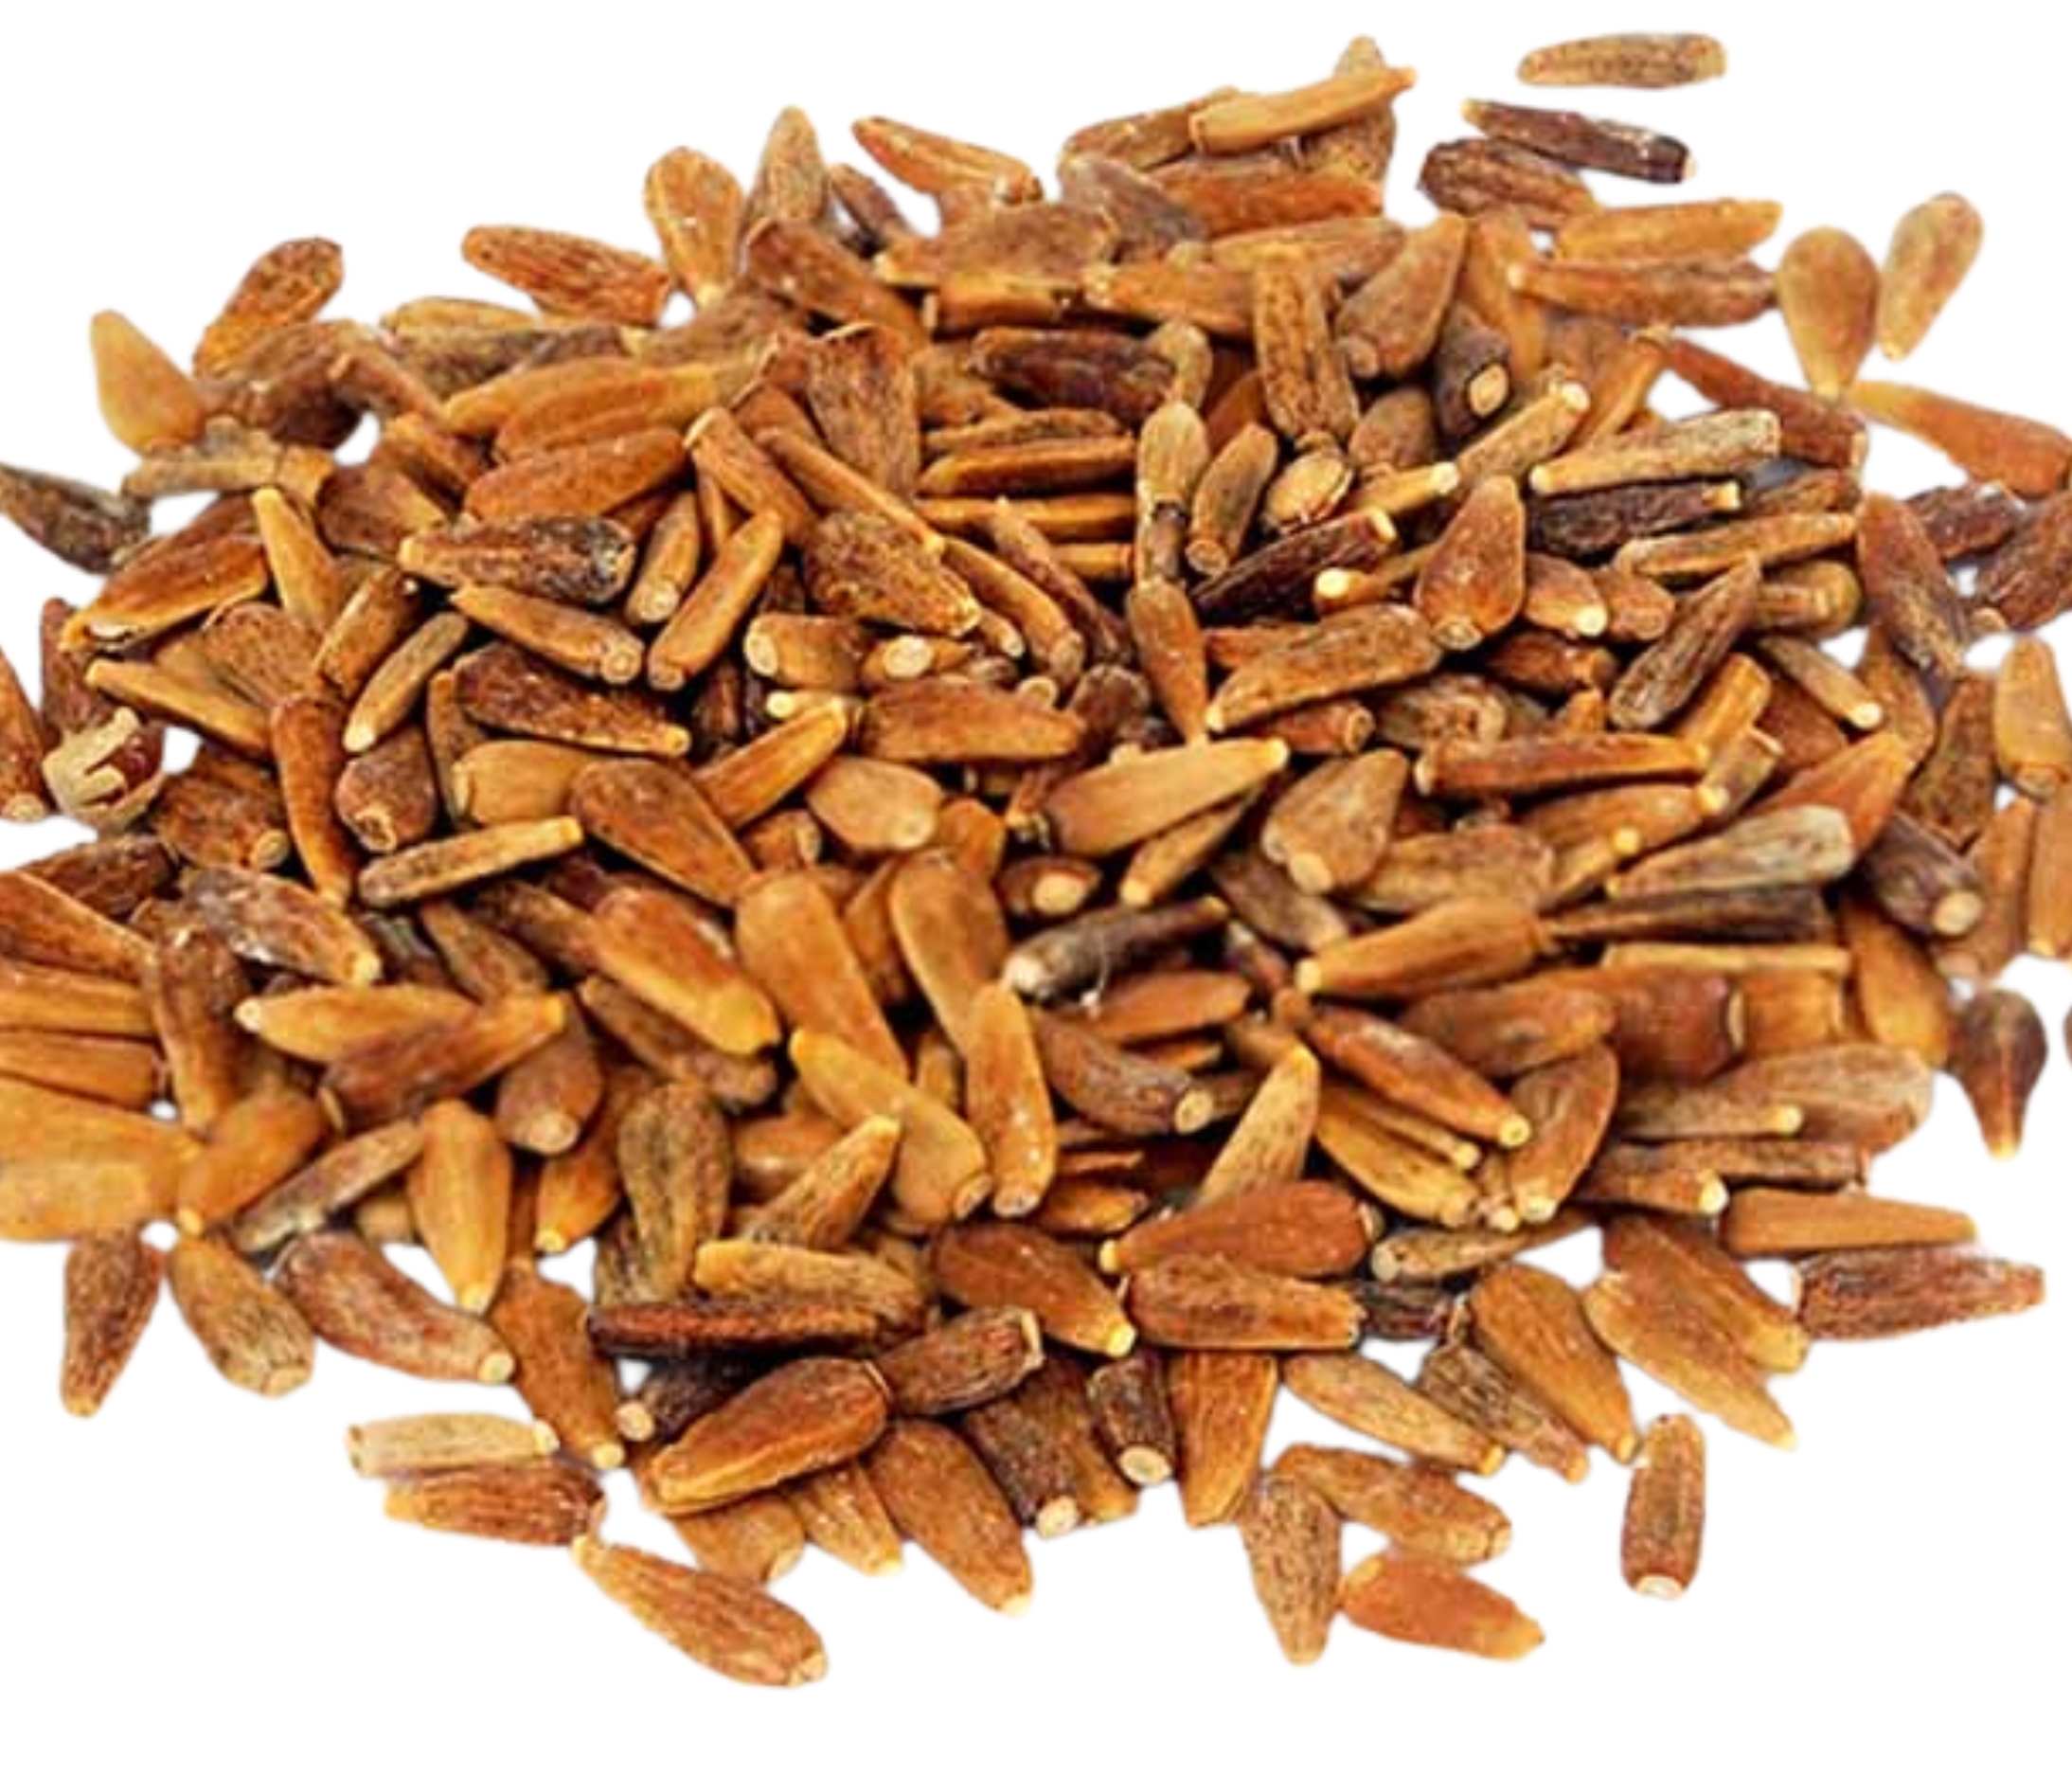 alyssum-easter-bonnet-seeds-per-package-5000-pcs